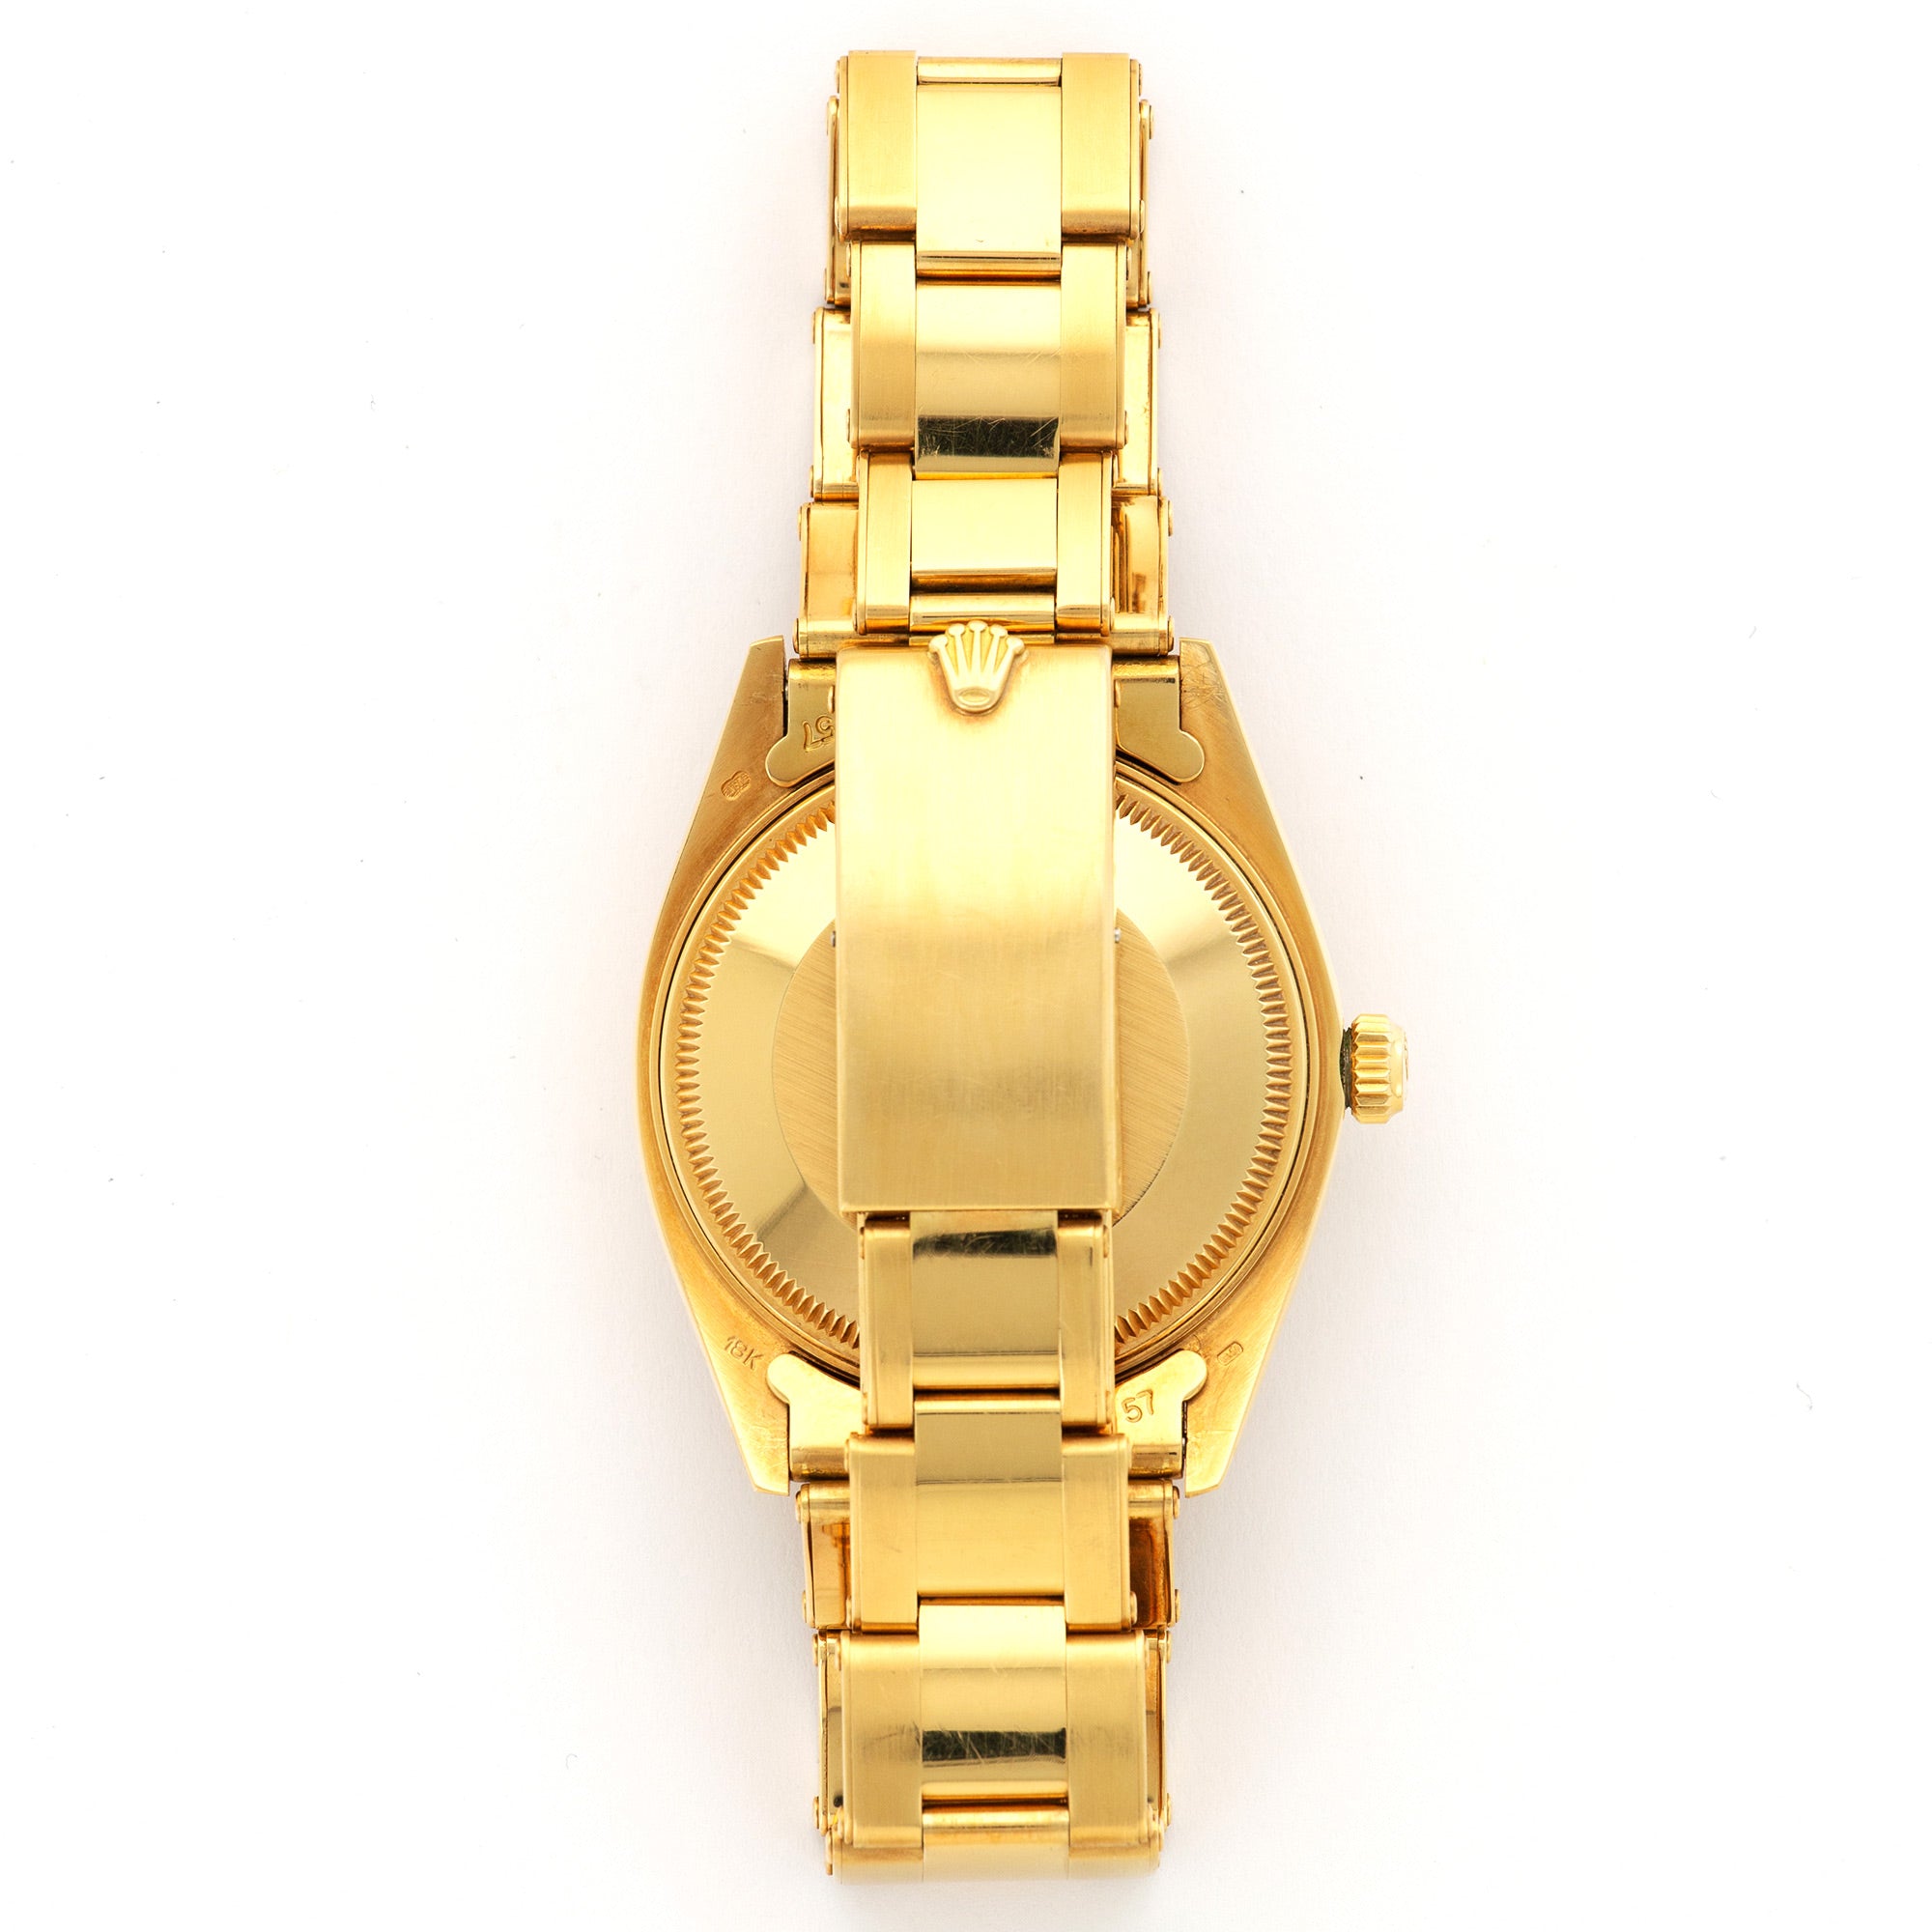 Rolex Yellow Gold Date Watch Ref. 1500 with Original Warranty Paper